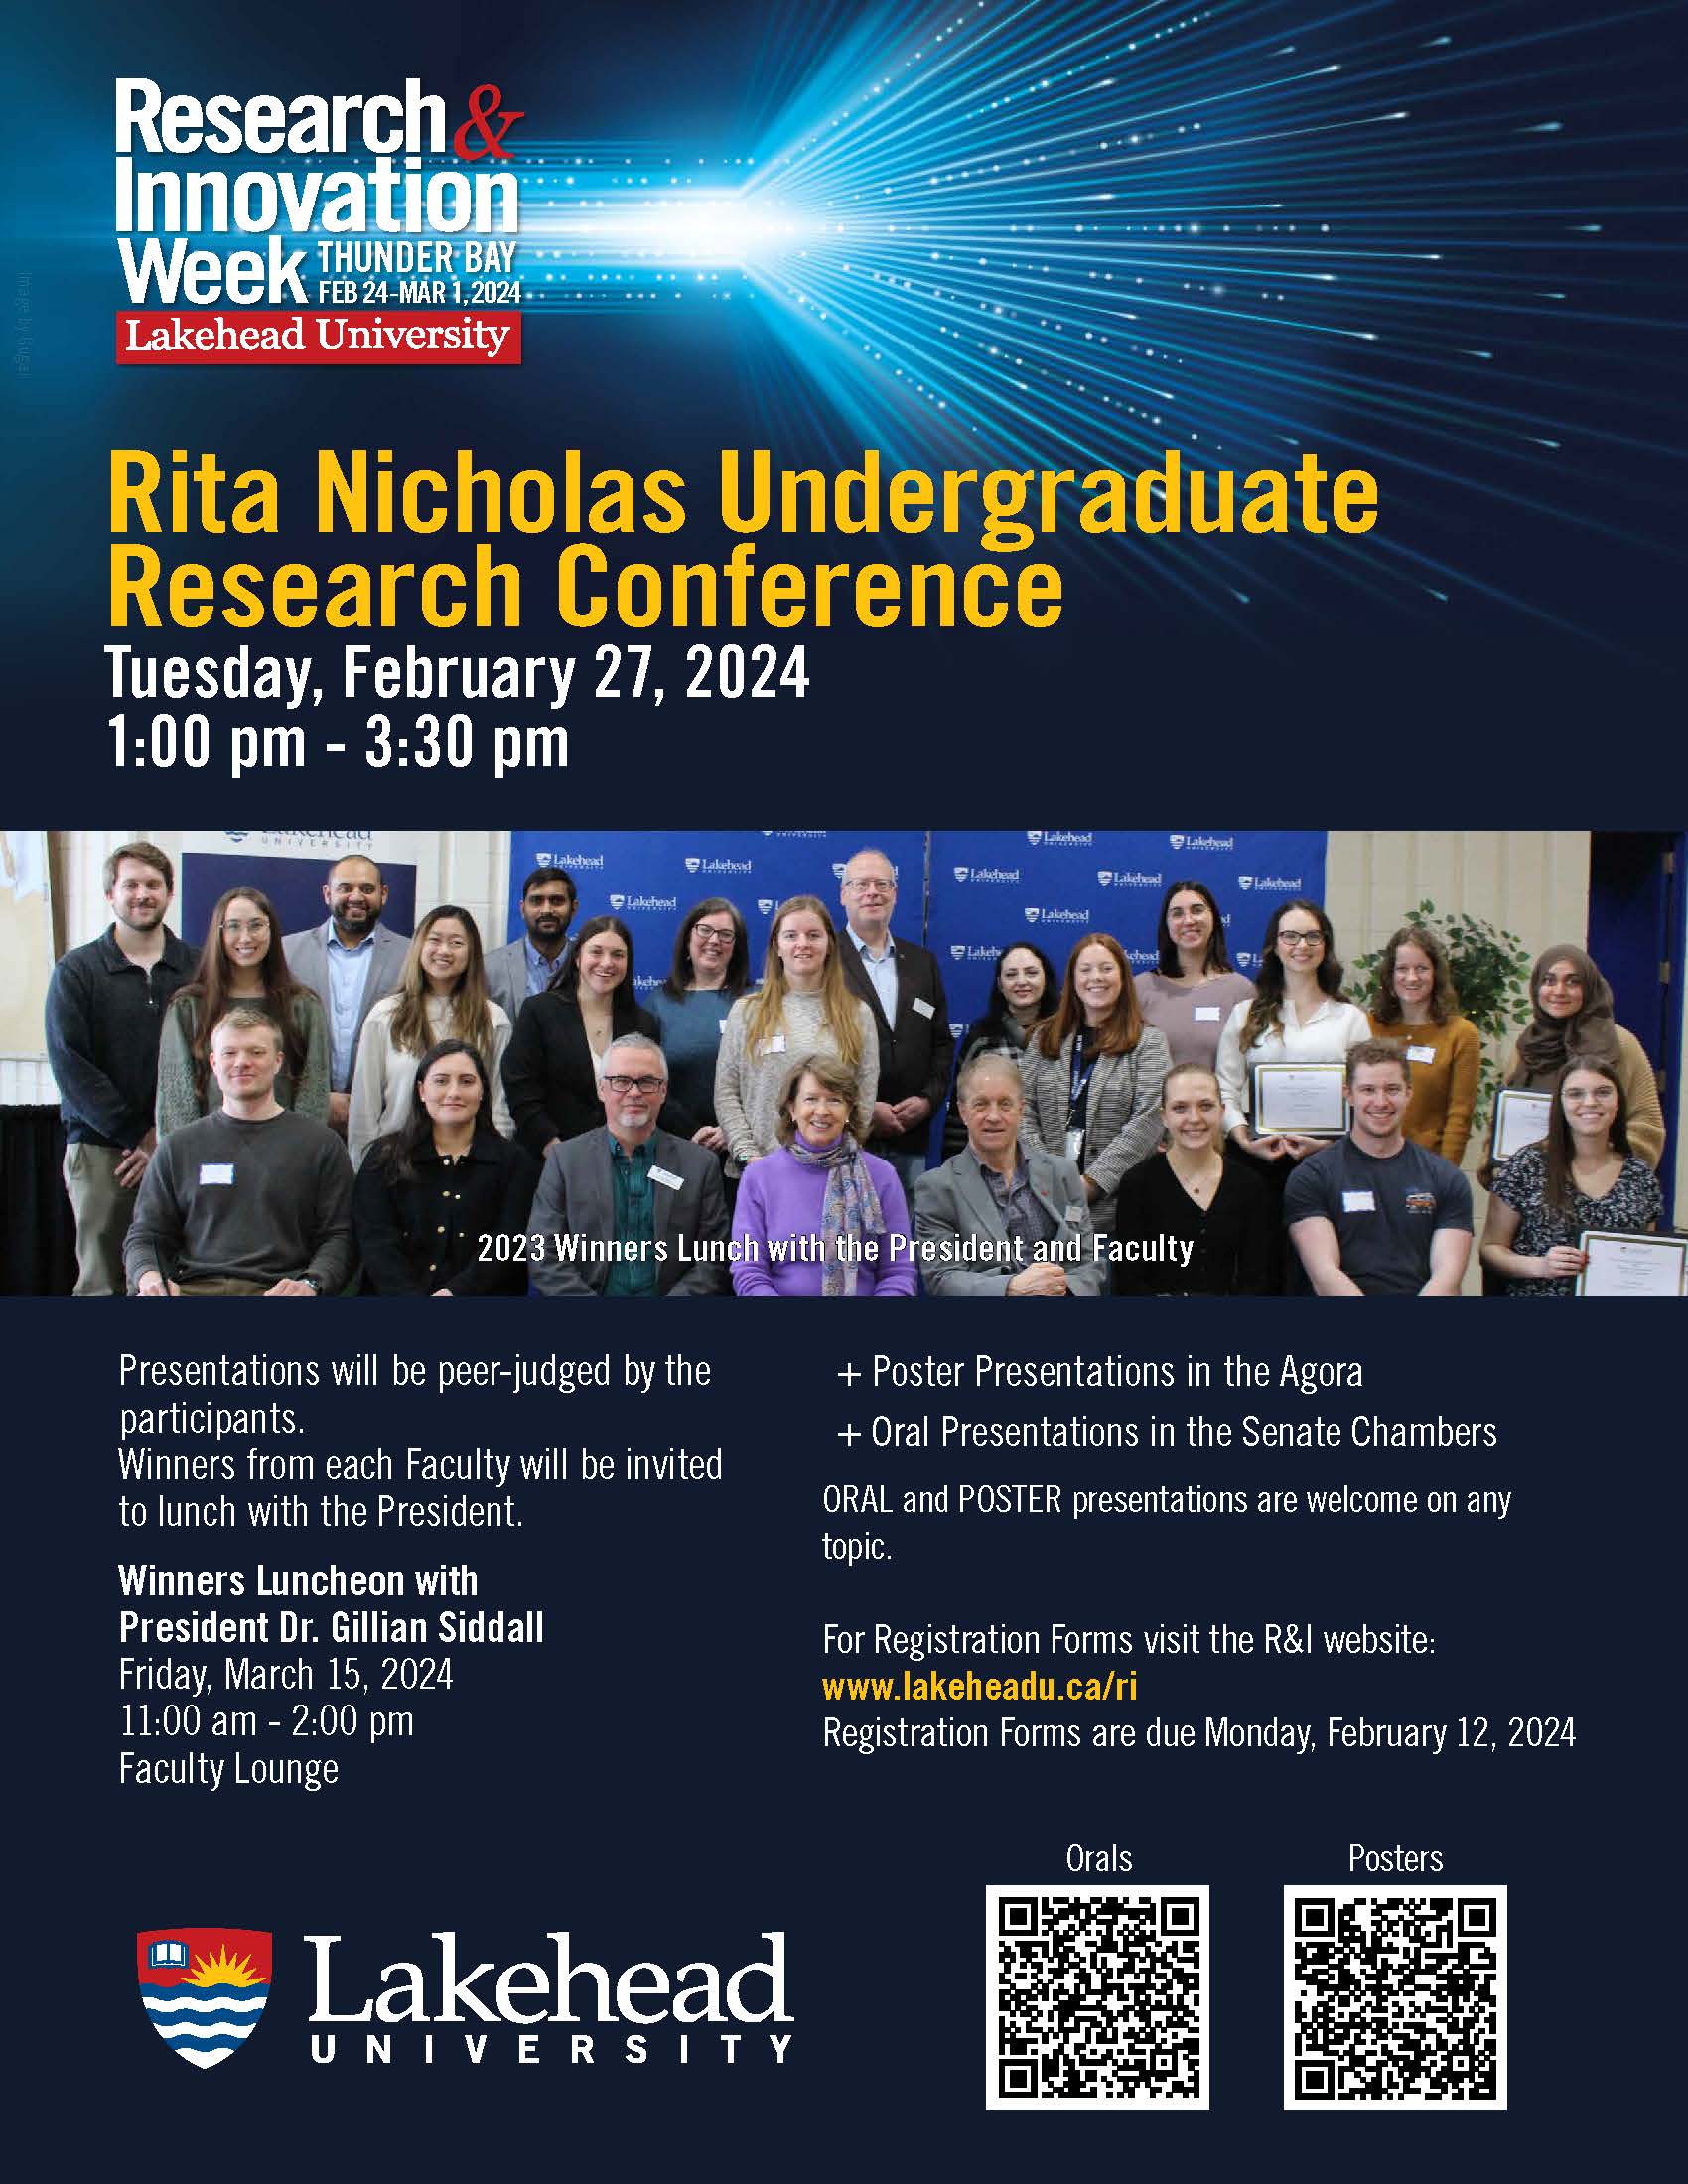 Rita Nicholas Undergraduate Research Conference Poster